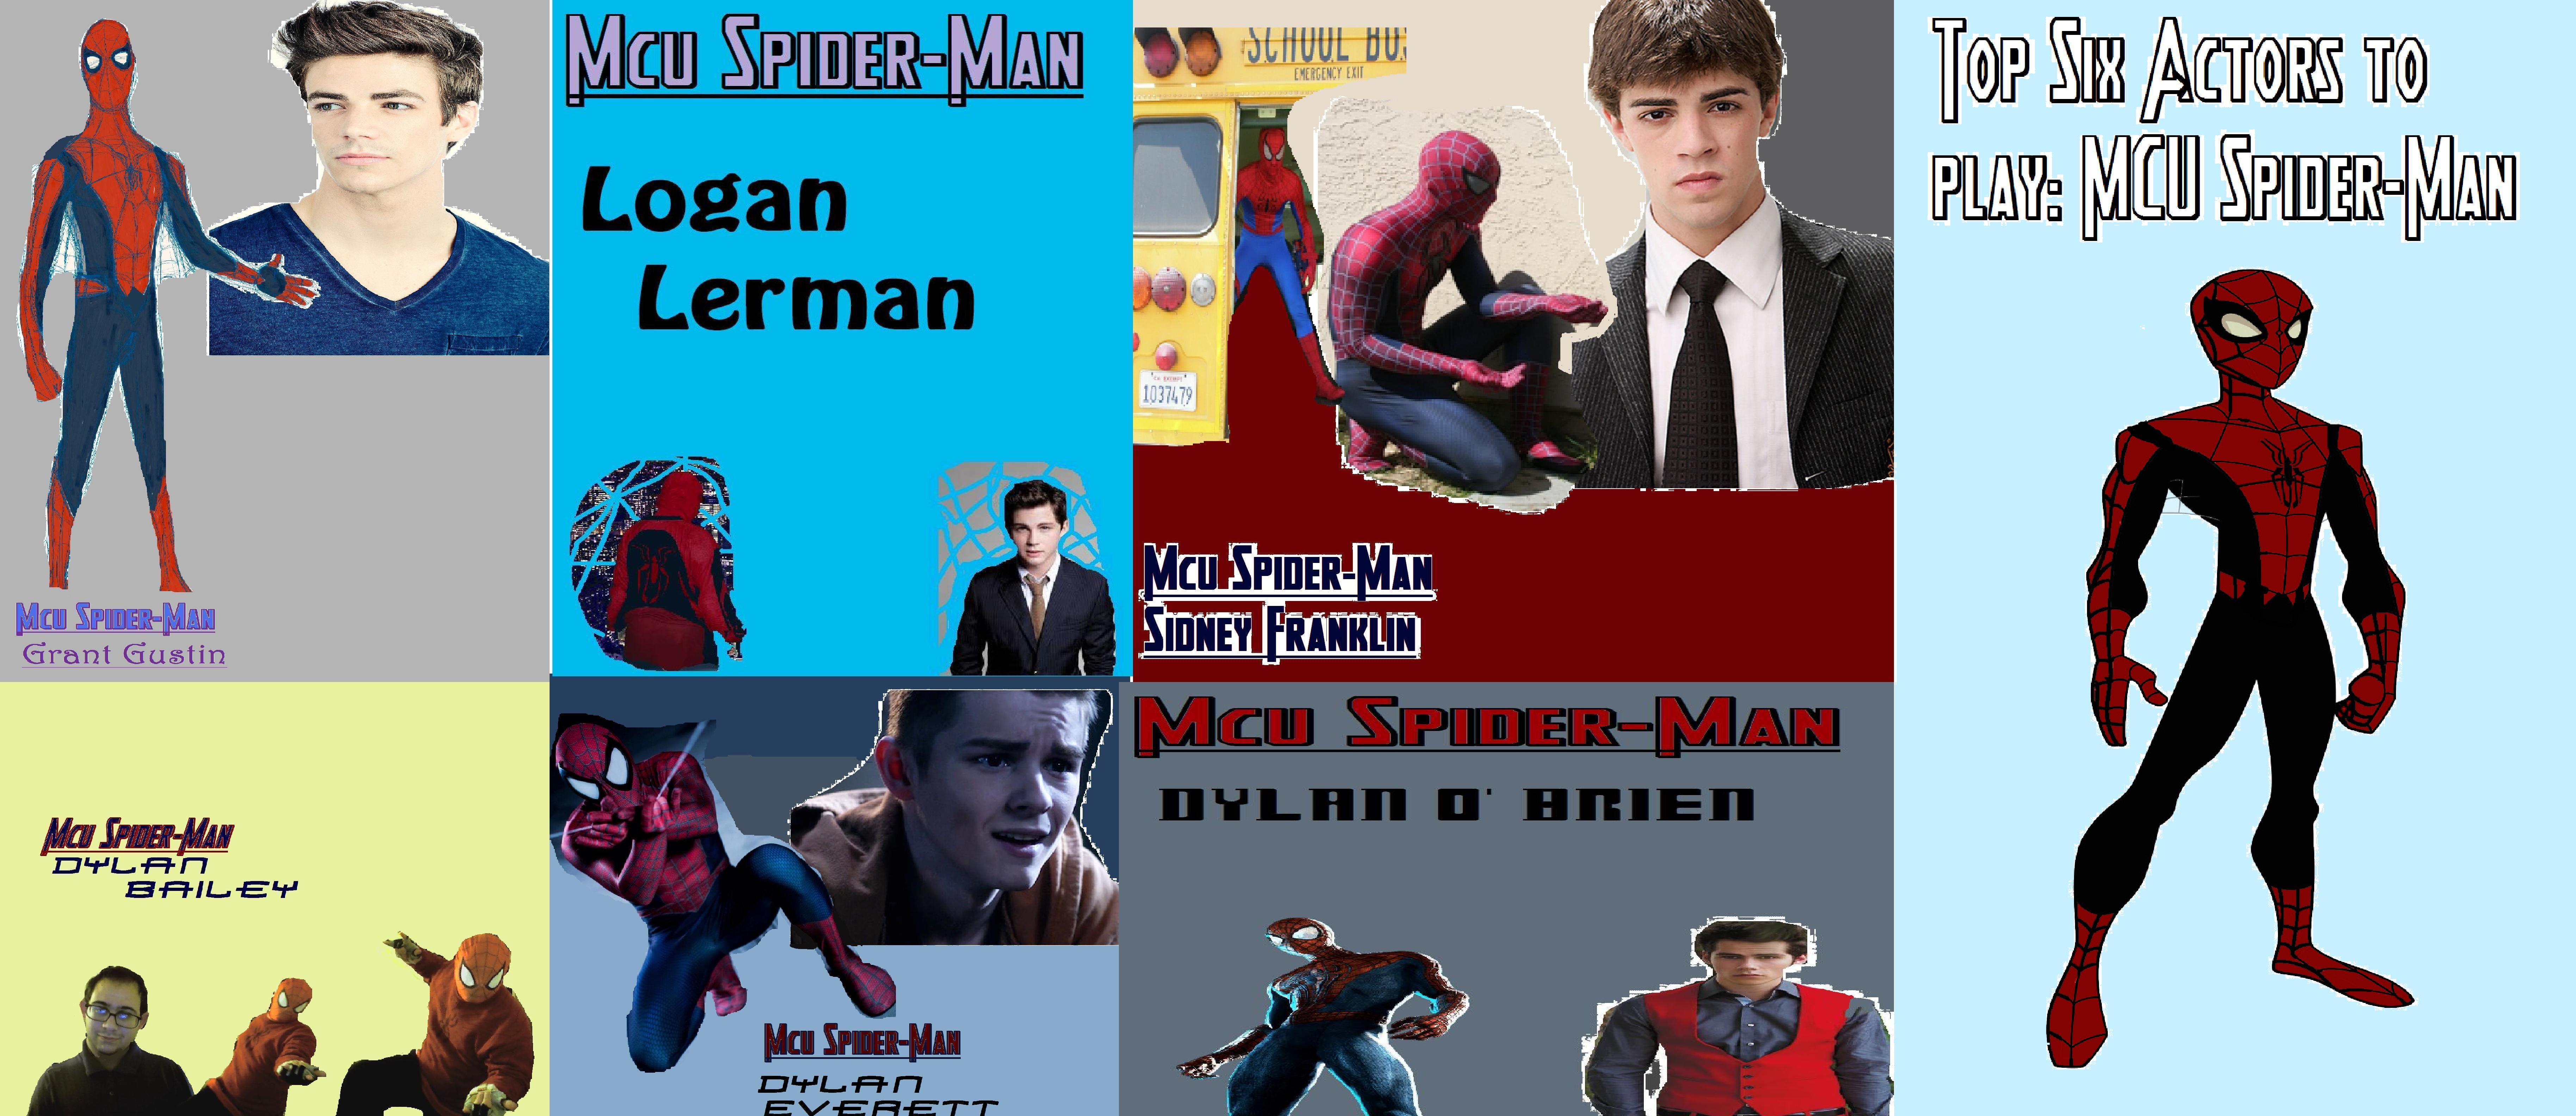 MCU Spider-man Fancast Top 6 Actors by skysoul25 on DeviantArt